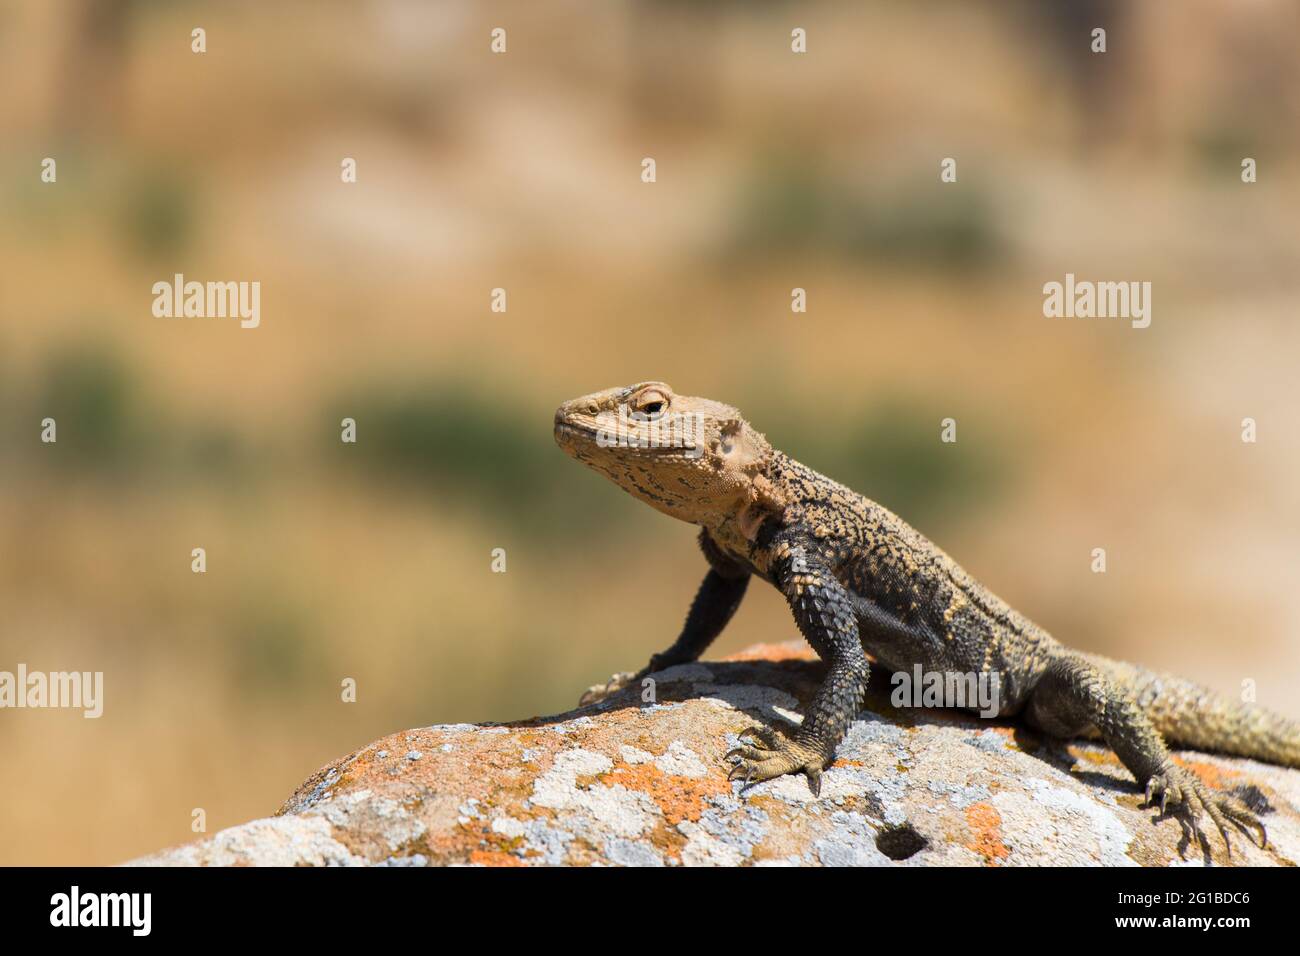 Desert spiny lizard. Wildlife animal. Agama Lizard closeup. The wild nature Stock Photo